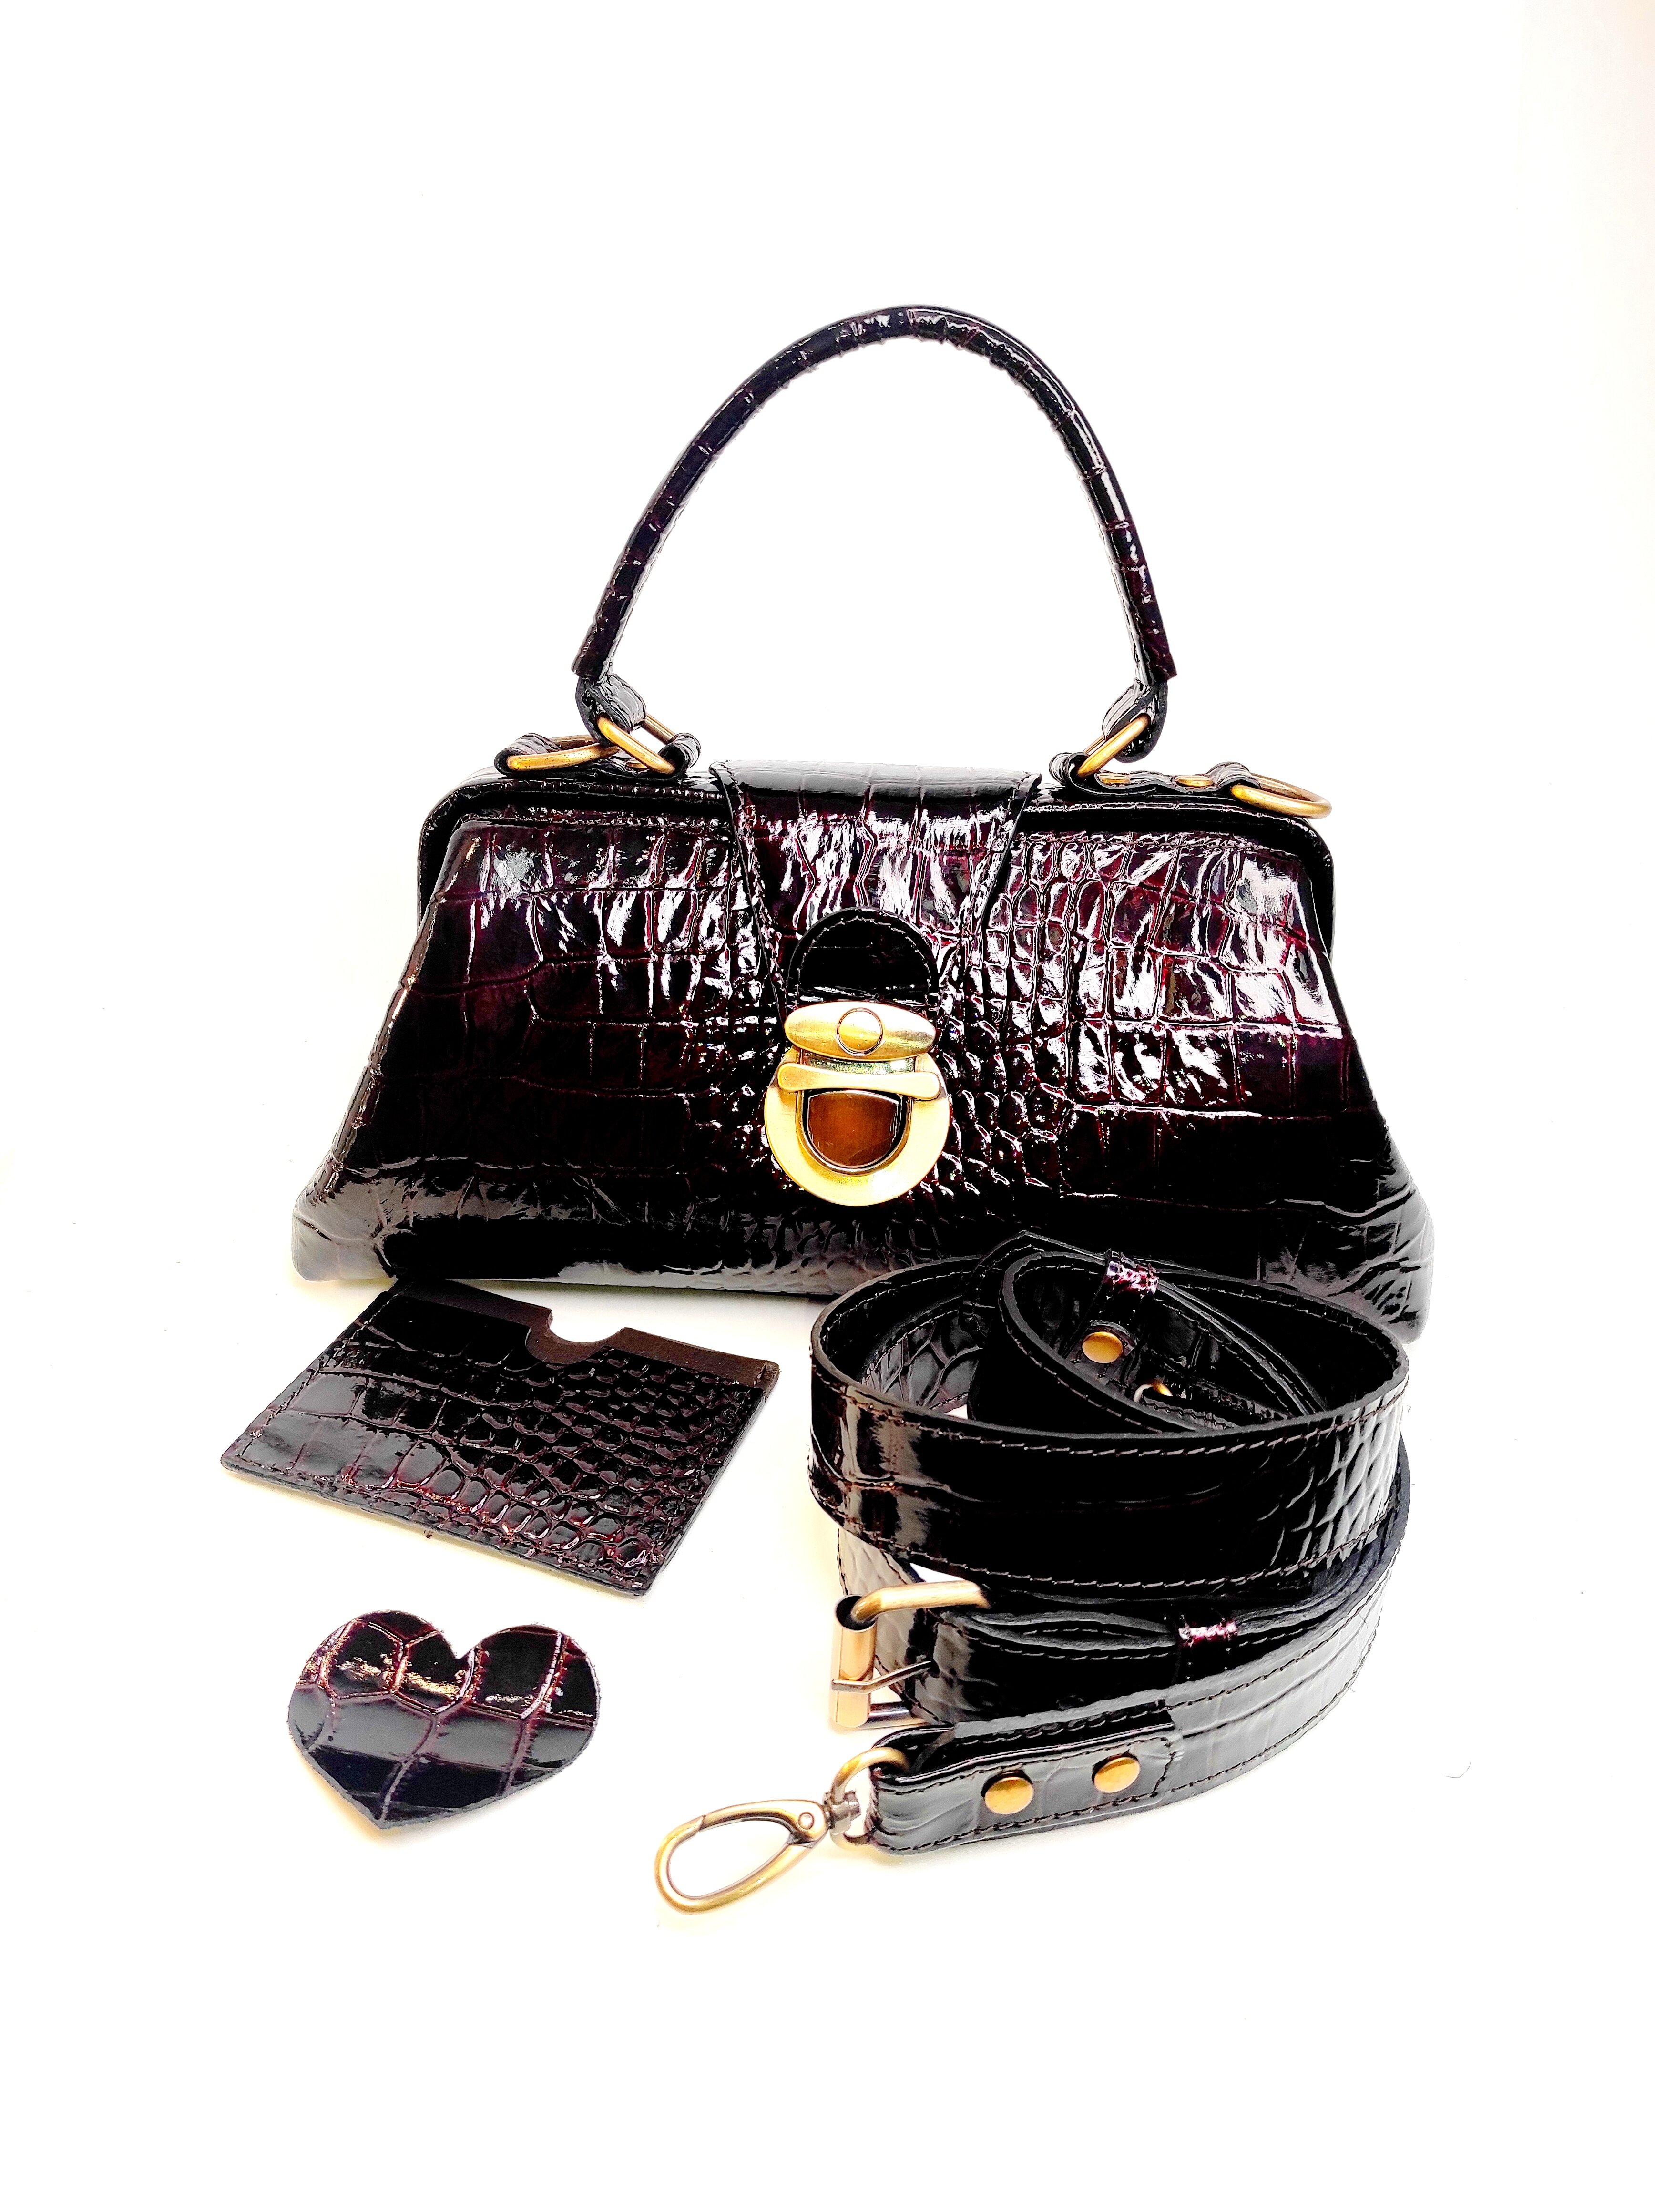 L.Terenty / Саквояж Baguette 23, натуральная кожа, винтаж, женская сумка, сумка на ремне, ручная работа - фотография № 1